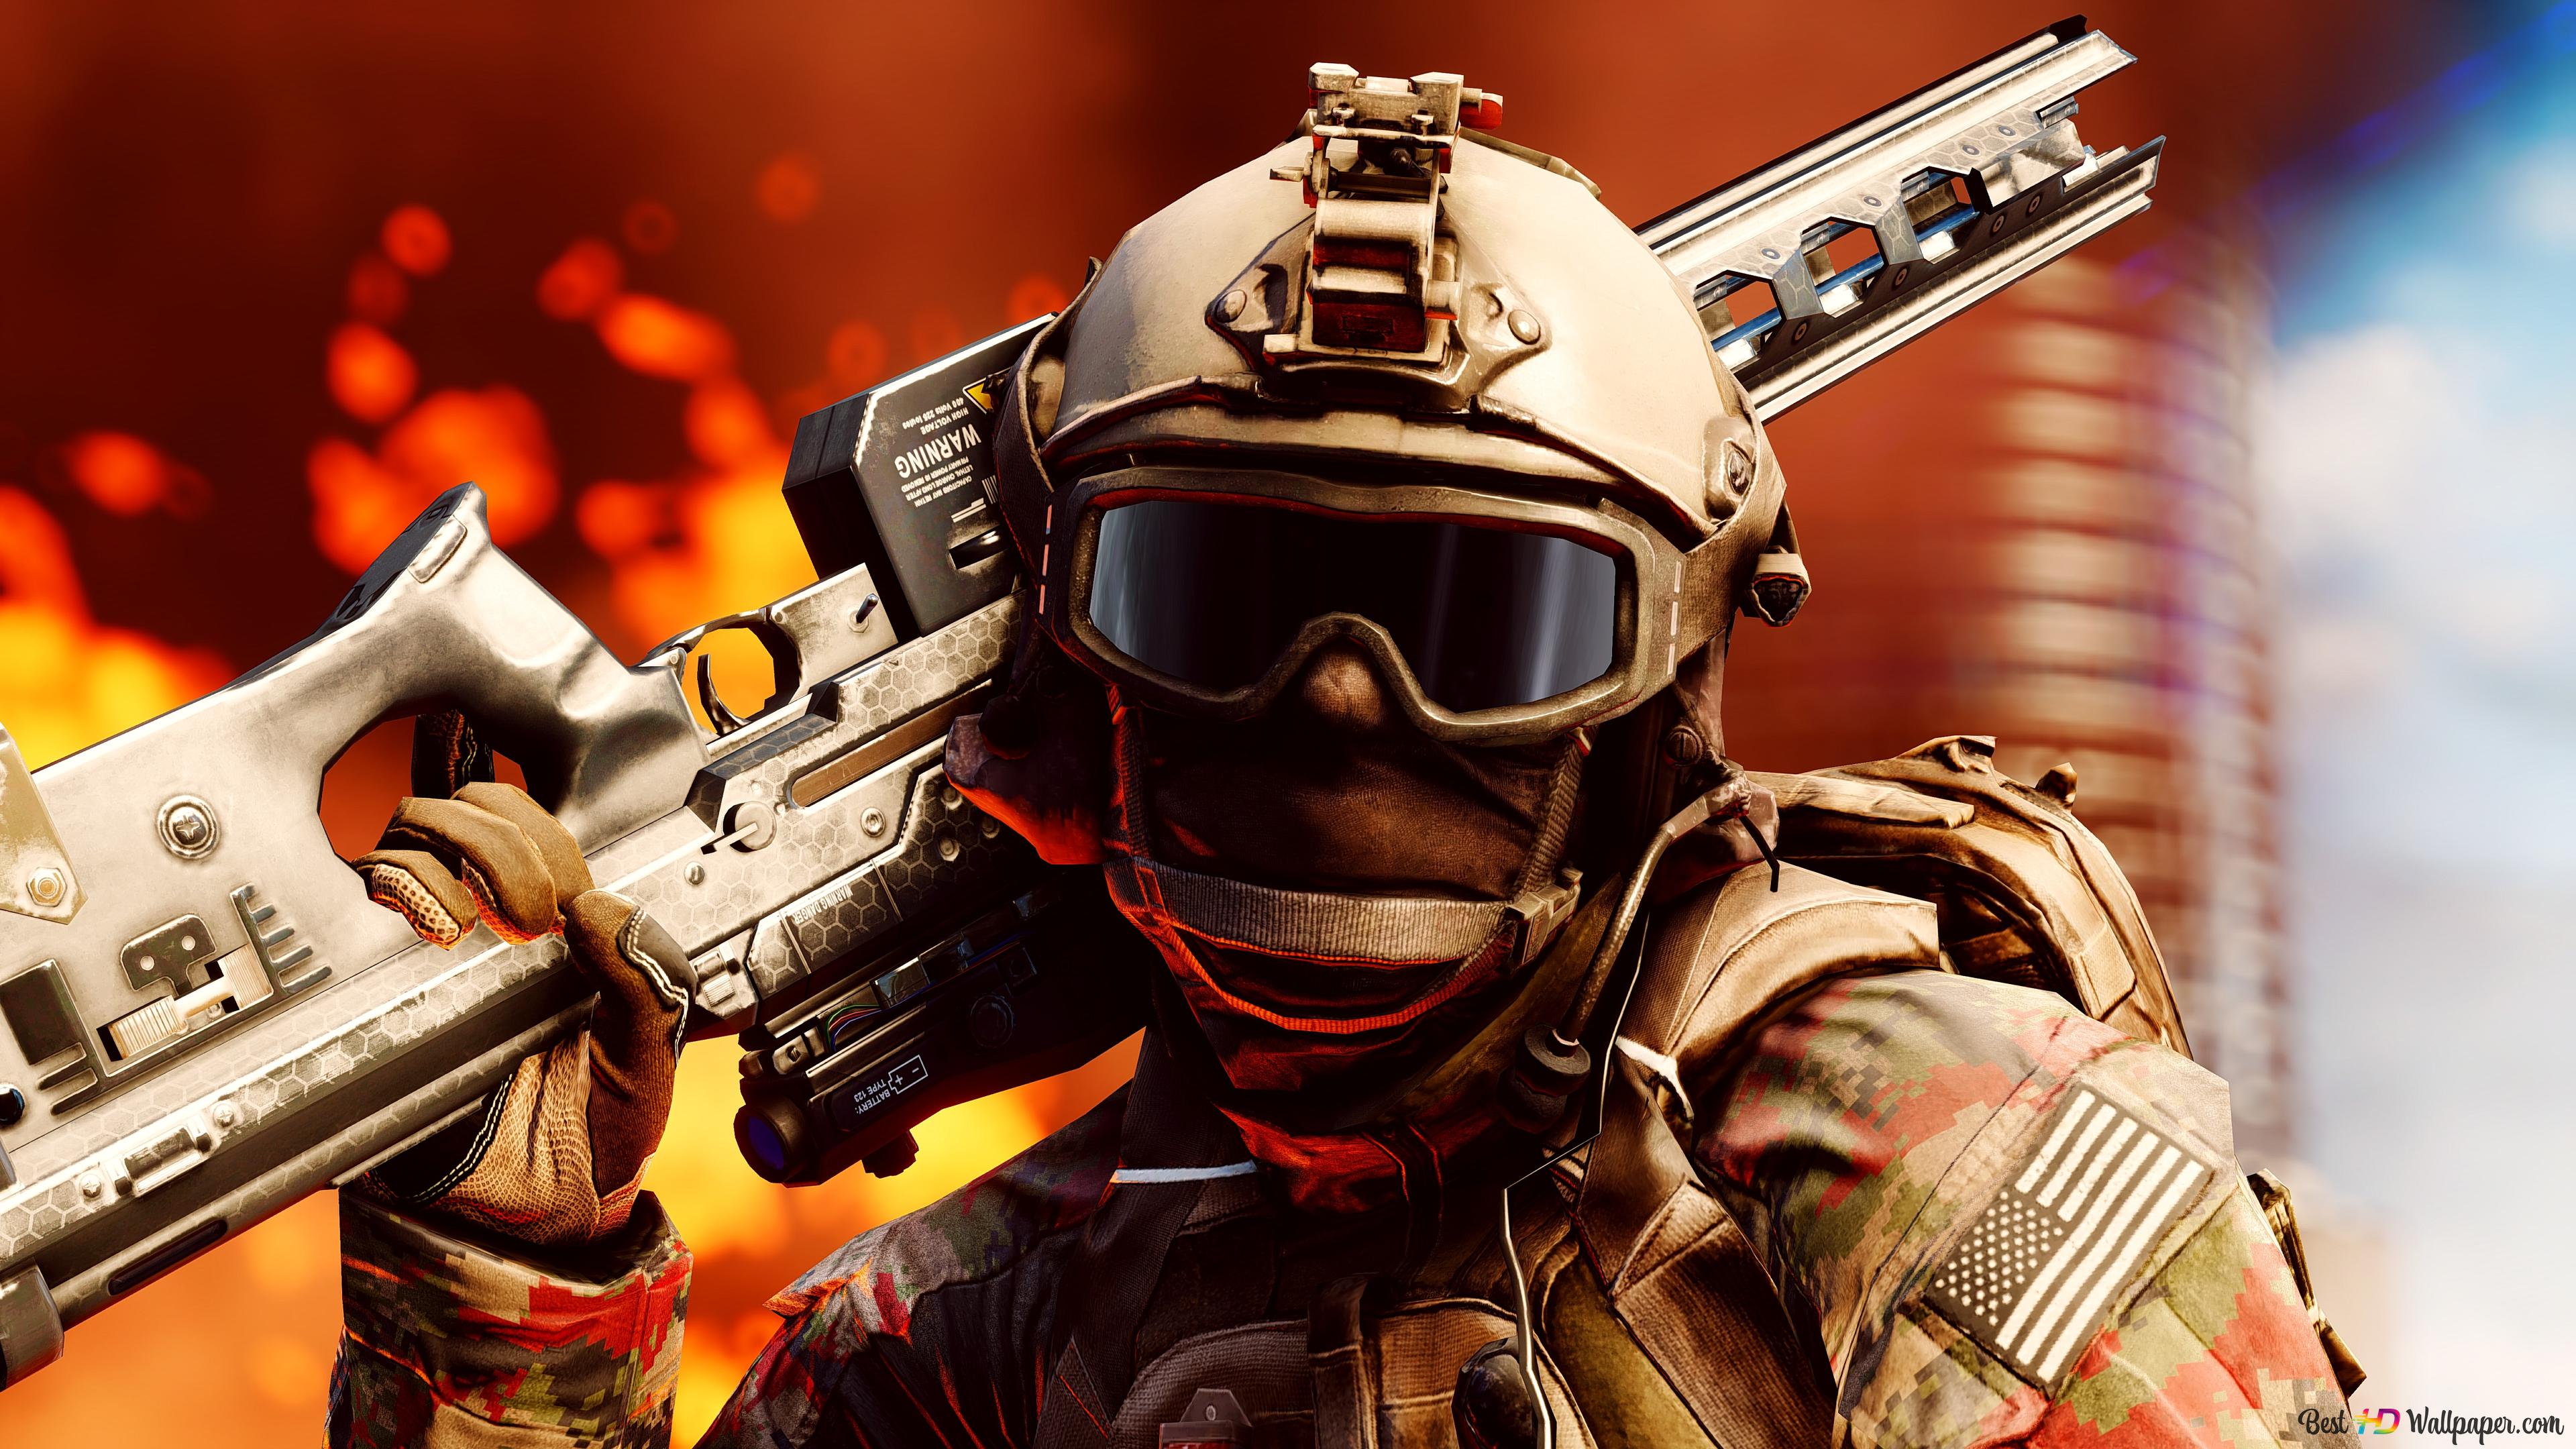 Battlefield 4 (game) 4K wallpaper download